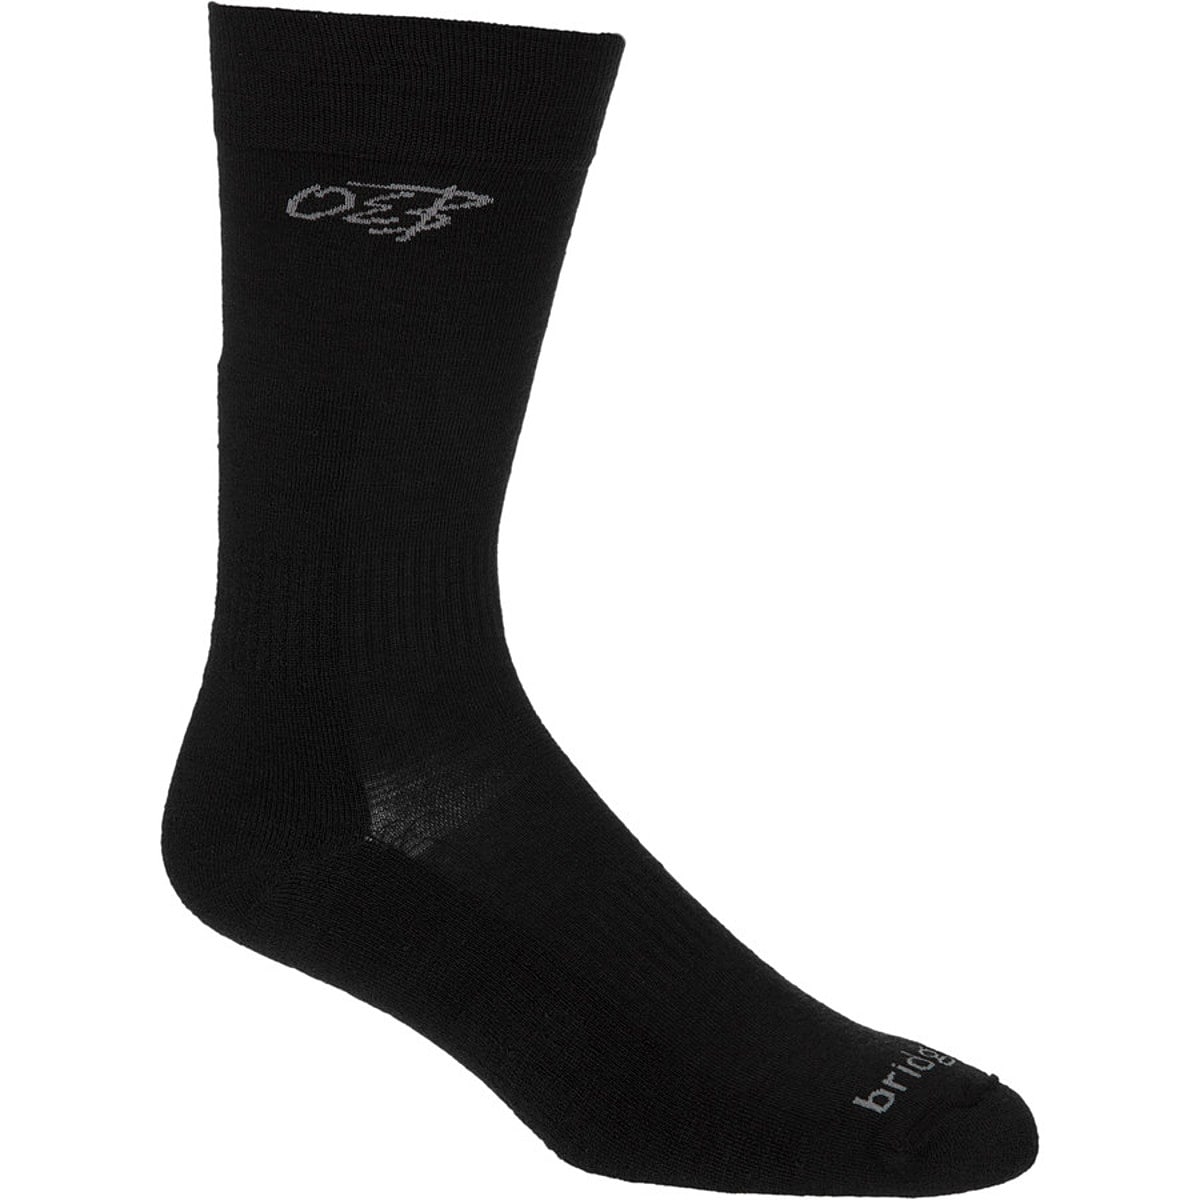 Details about   Bridgedale Men's Cross Country Boot Height Merino Performance Ski Socks 